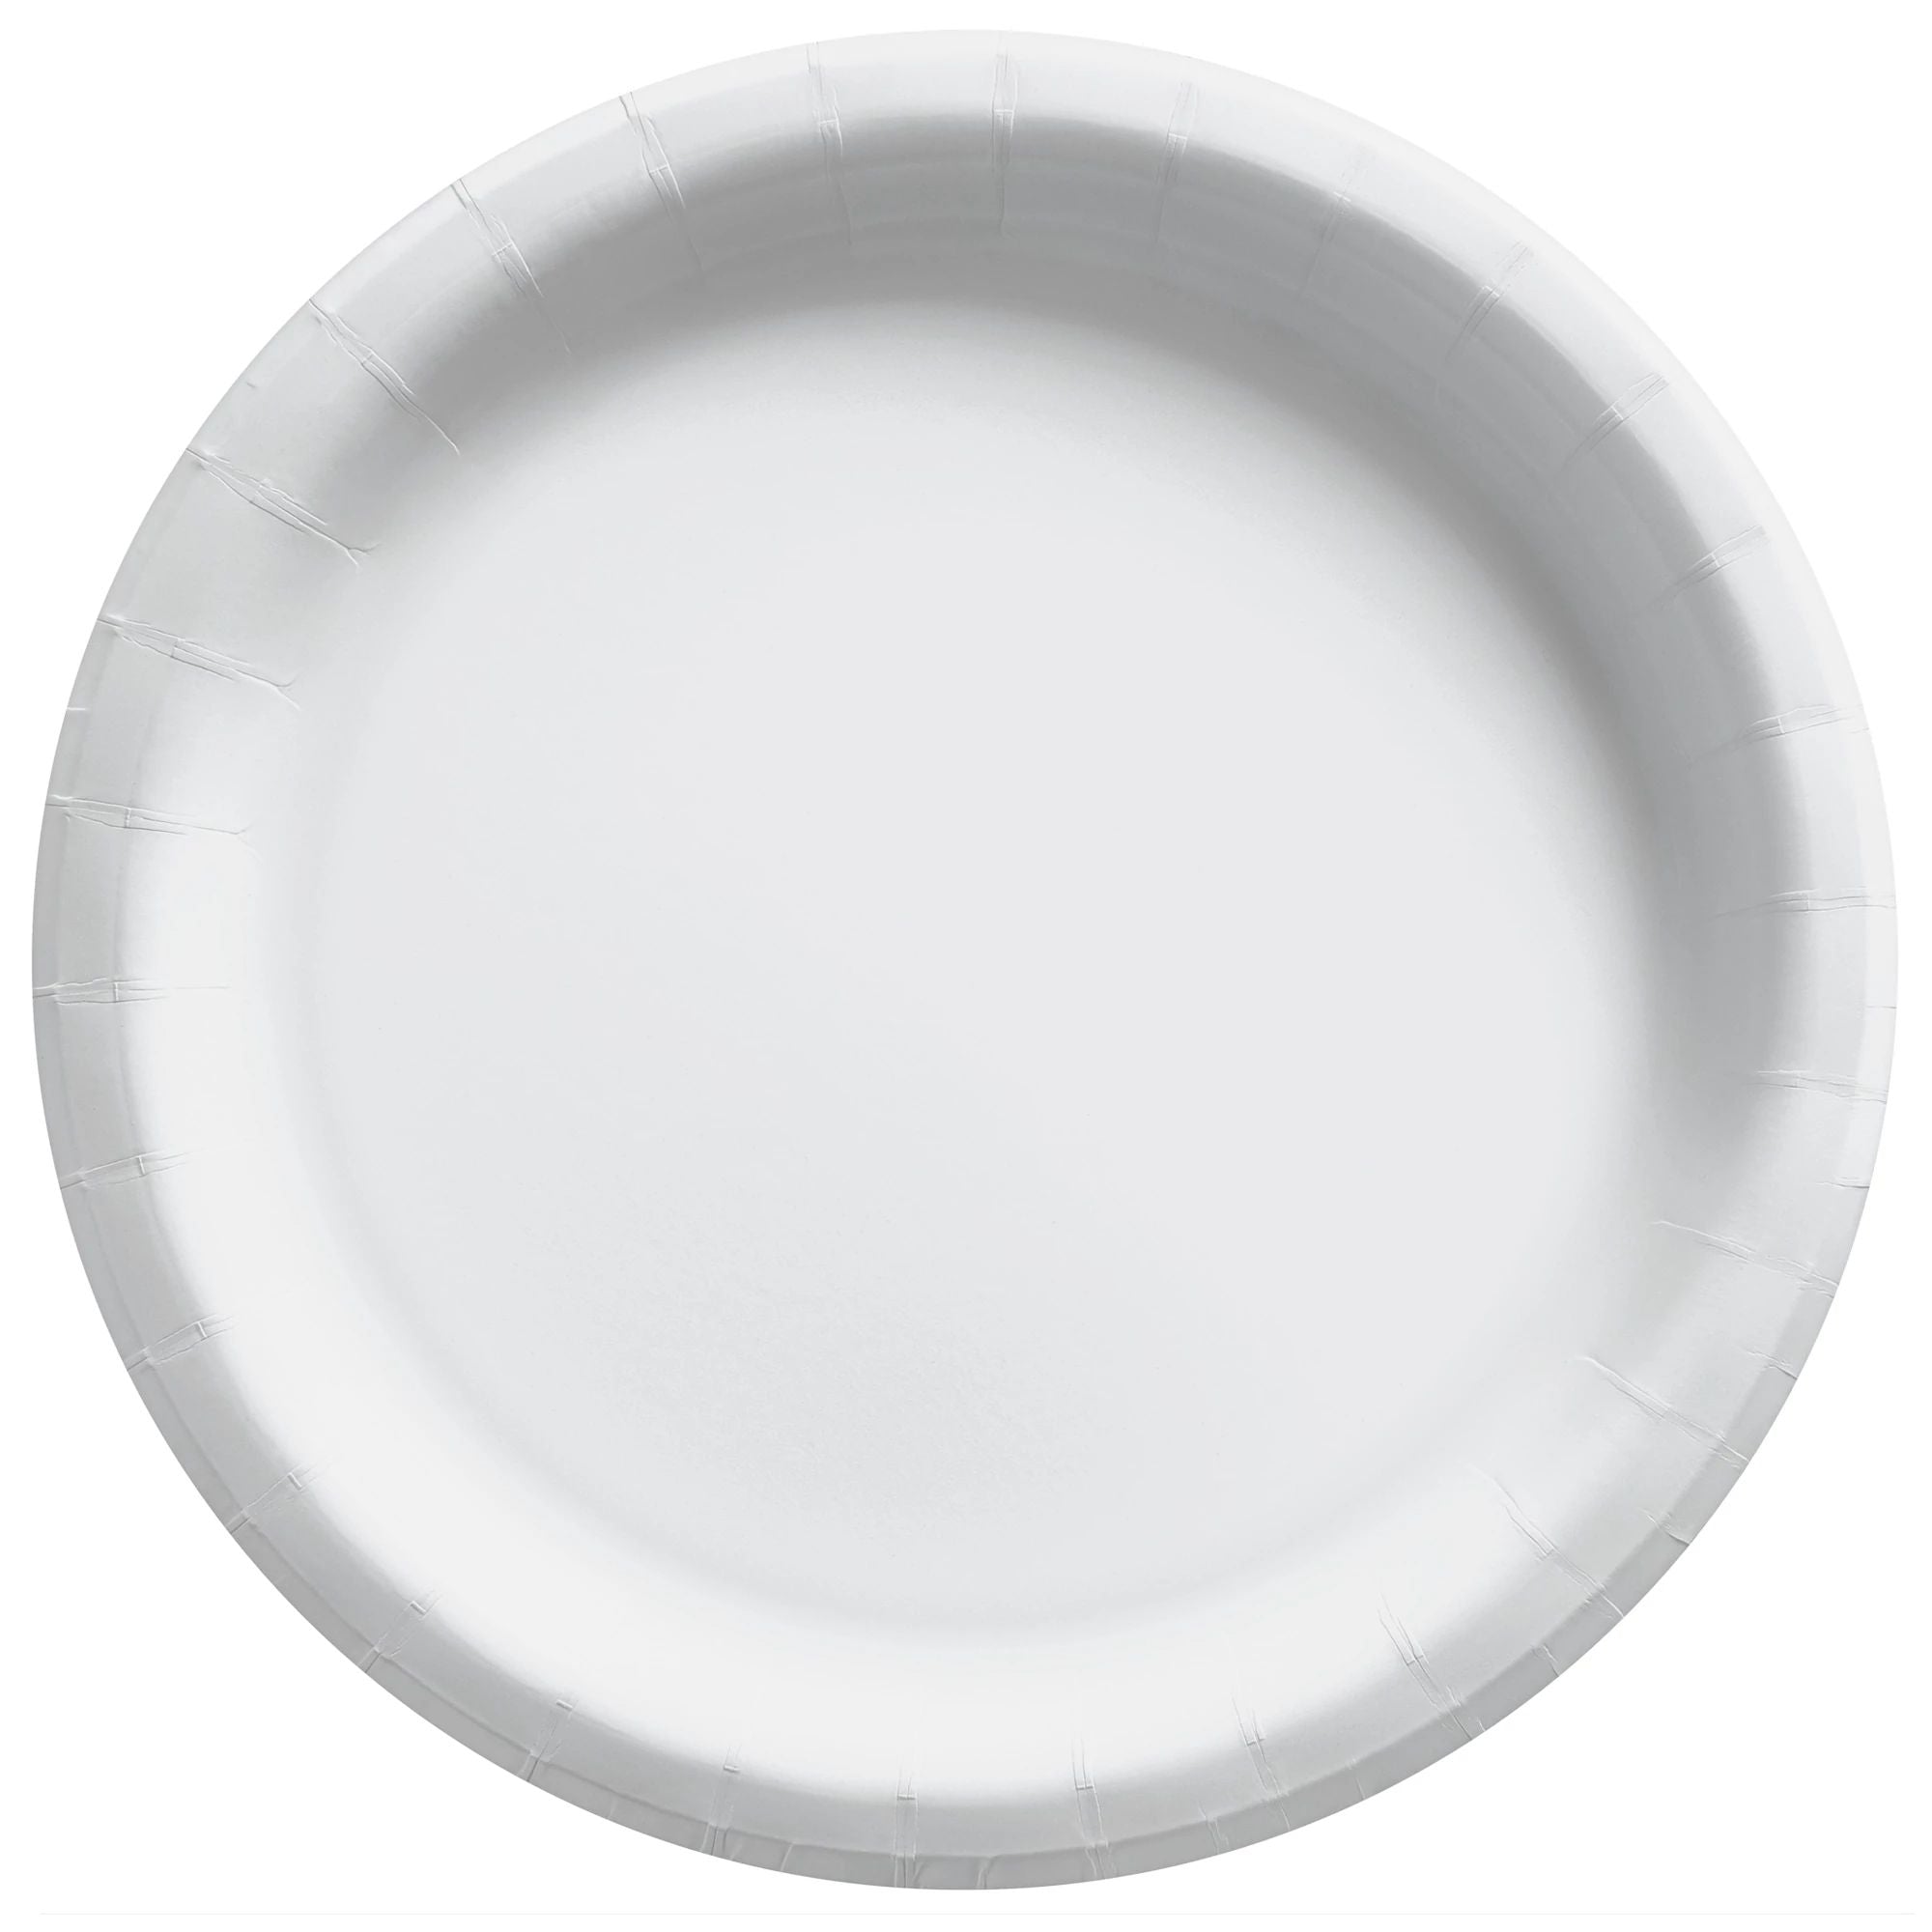 8 1/2" Round Paper Plates - White
20ct